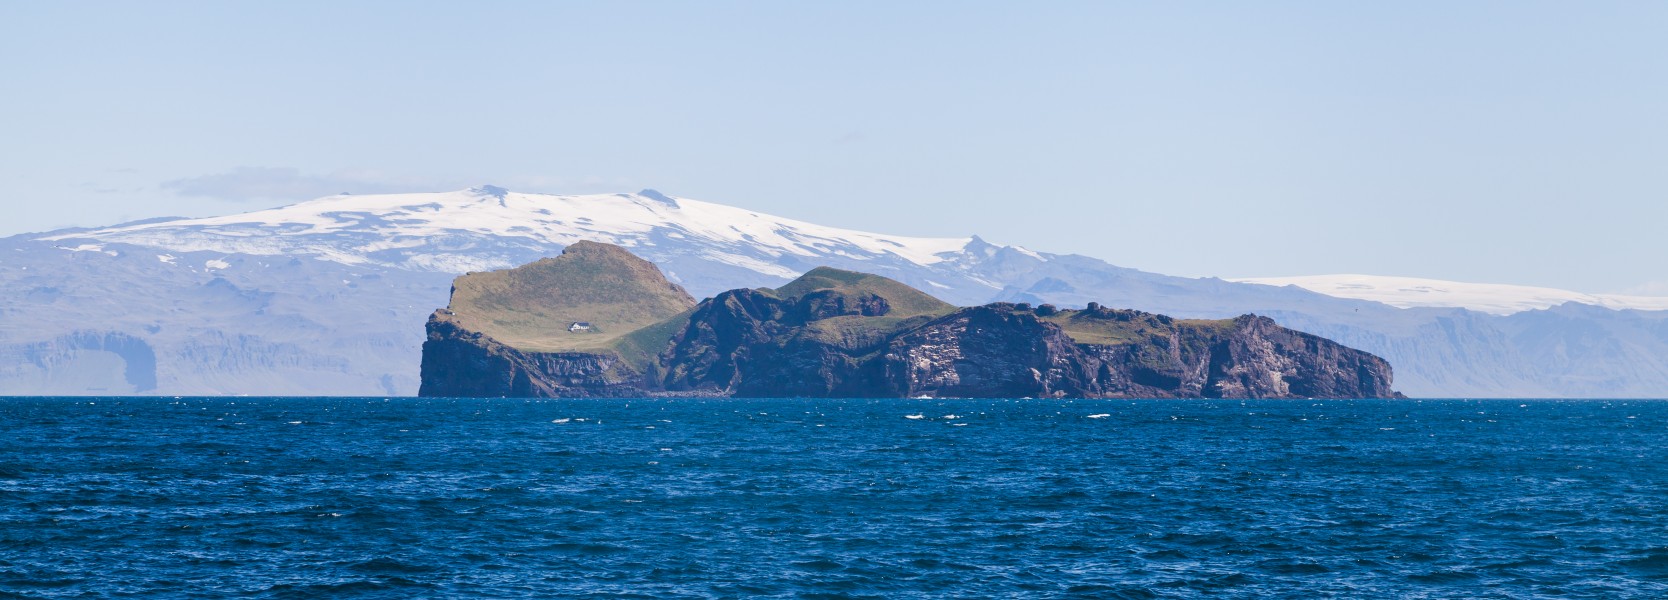 Isla Elliðaey, Islas Vestman, Suðurland, Islandia, 2014-08-17, DD 079